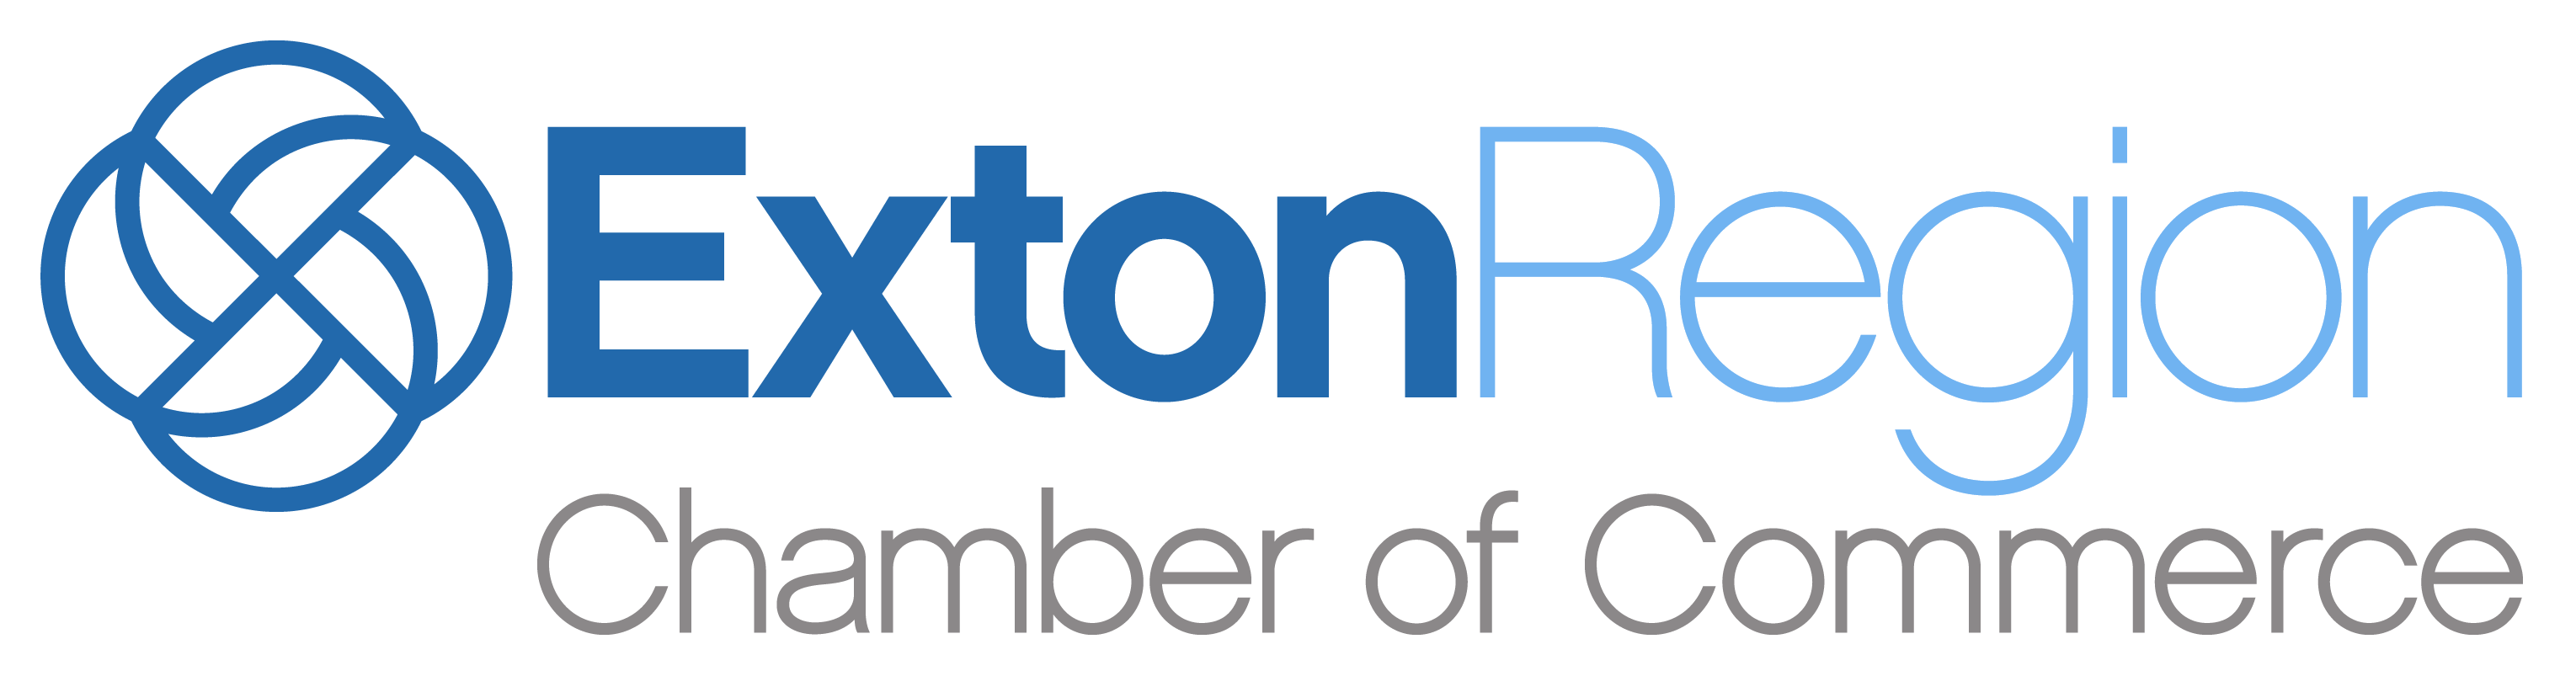 Exton Region Chamber of Commerce logo